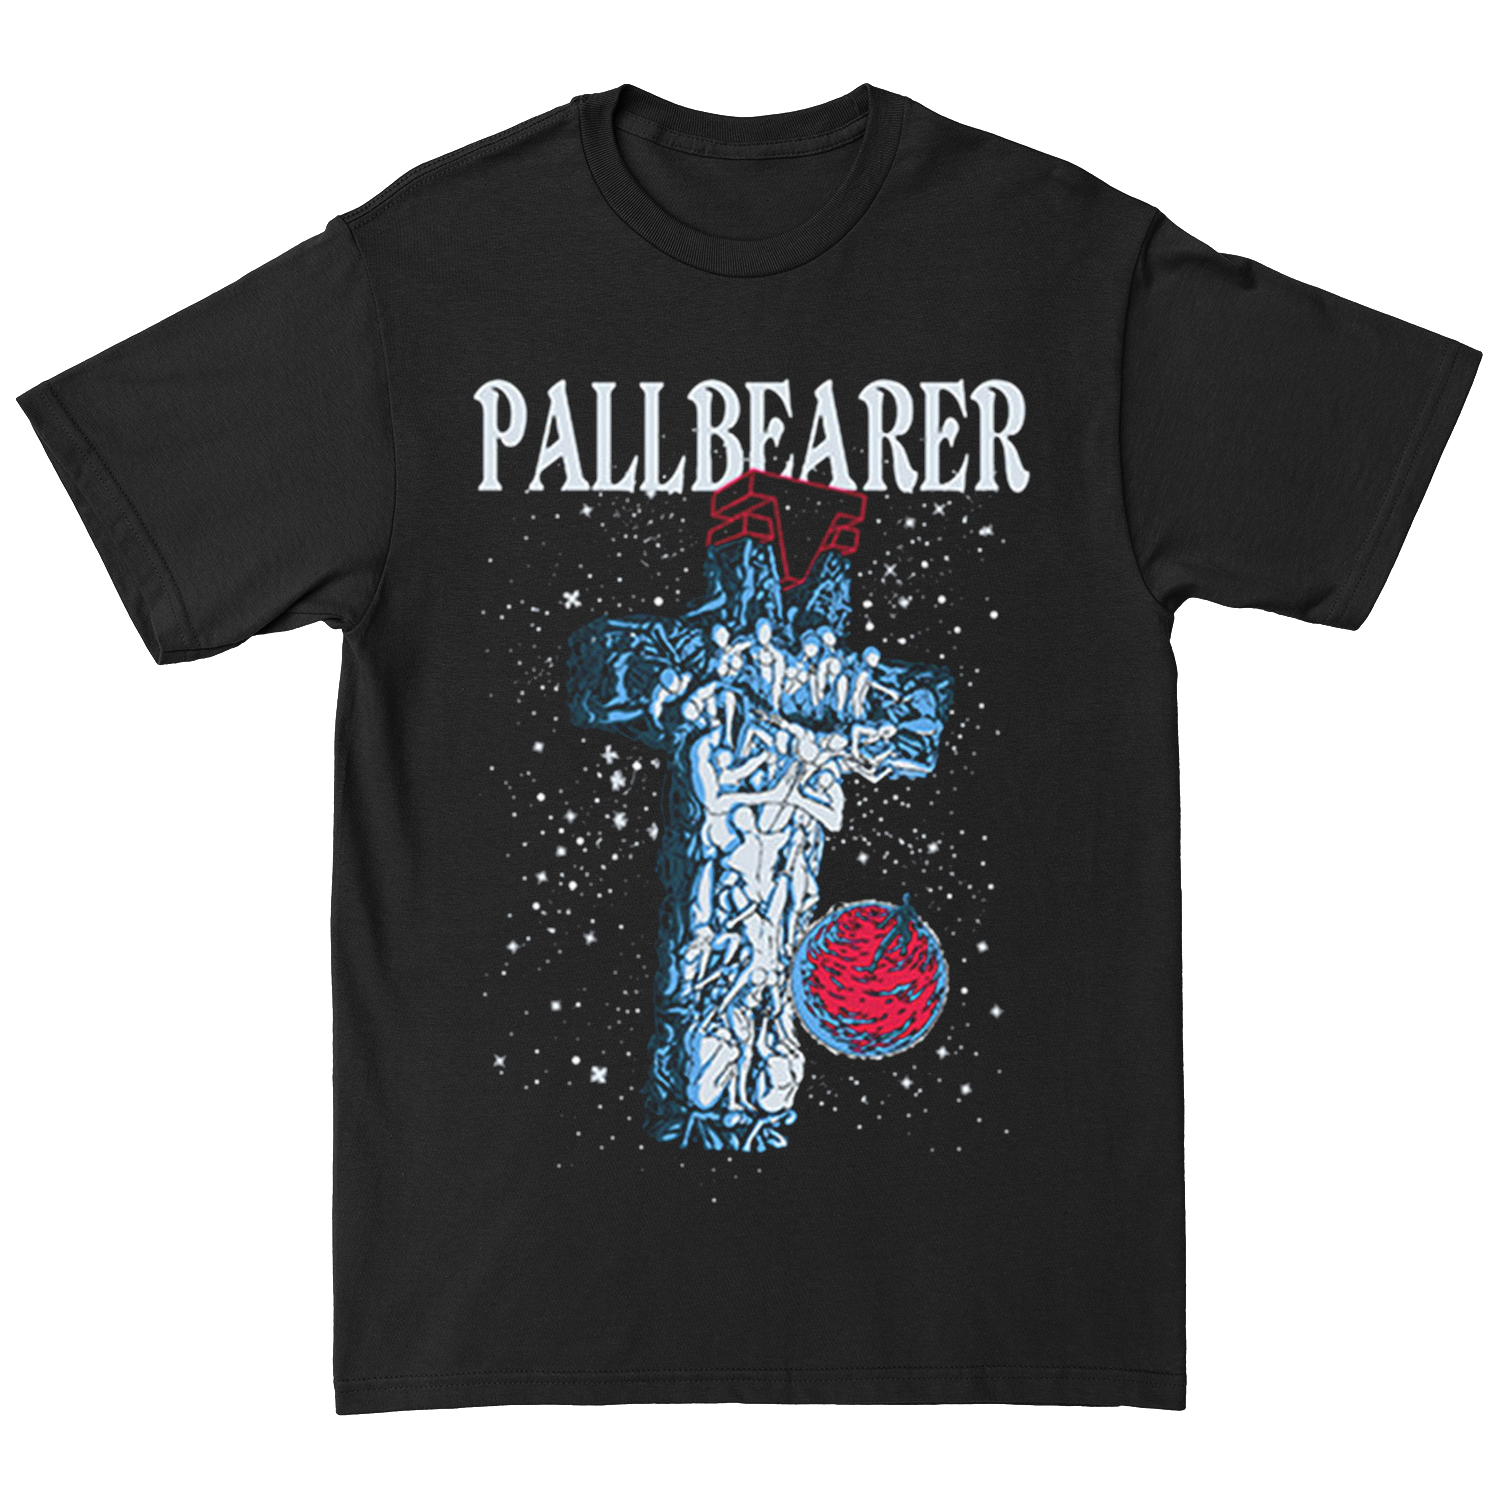 PALLBEARER "Cosmic Cross" Black T-Shirt (Final Run)